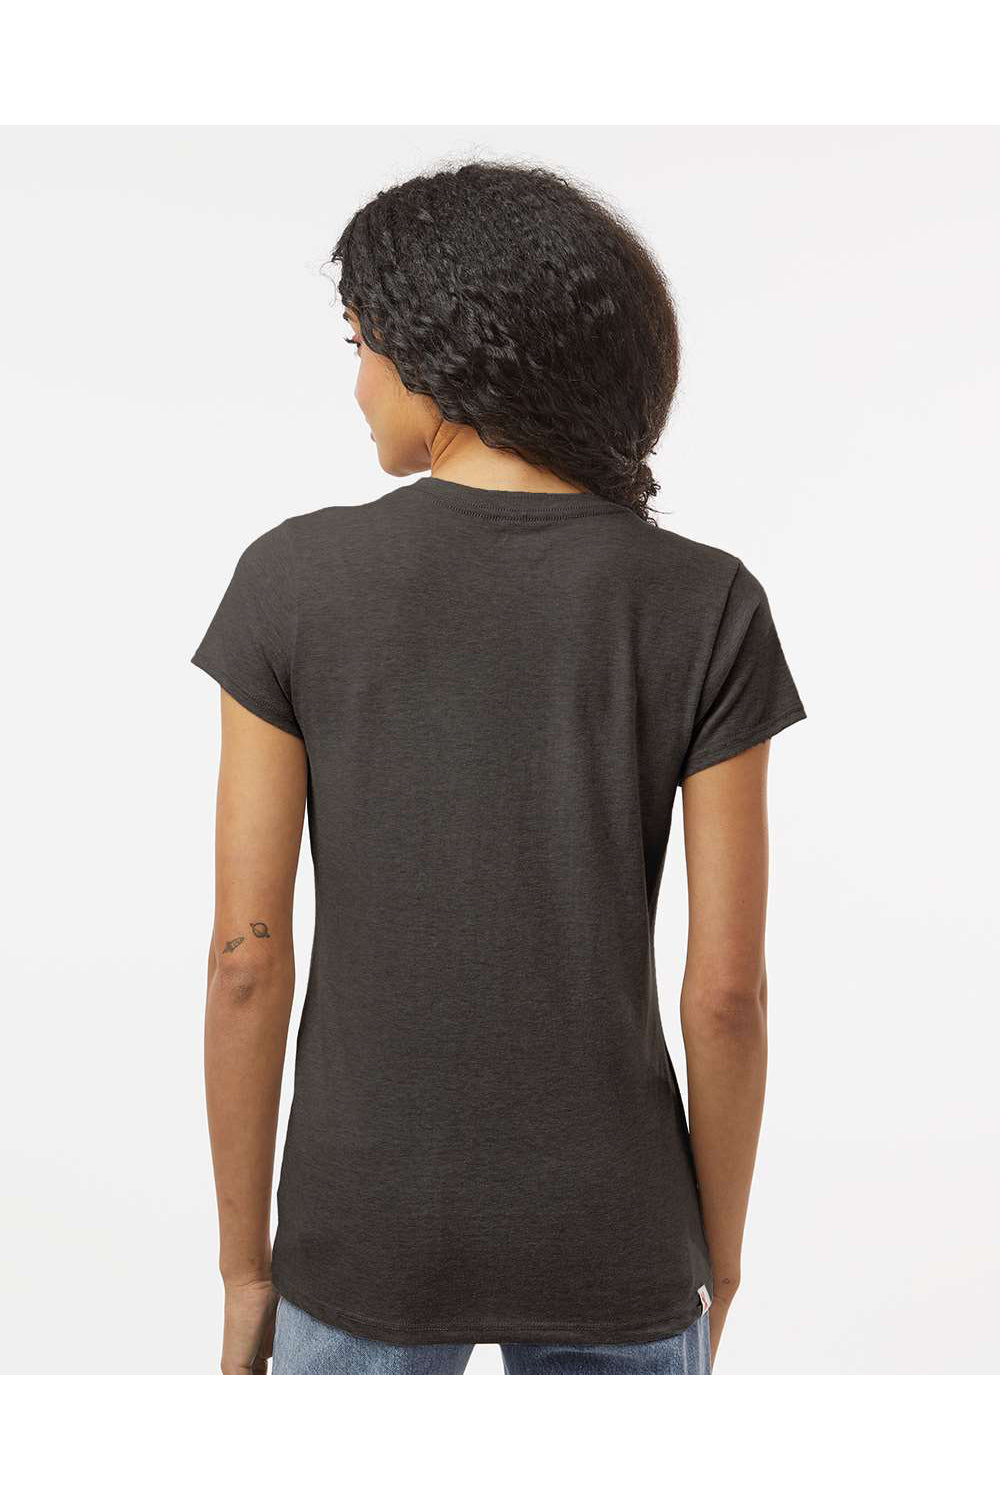 Kastlfel 2011 Womens RecycledSoft Short Sleeve V-Neck T-Shirt Carbon Grey Model Back